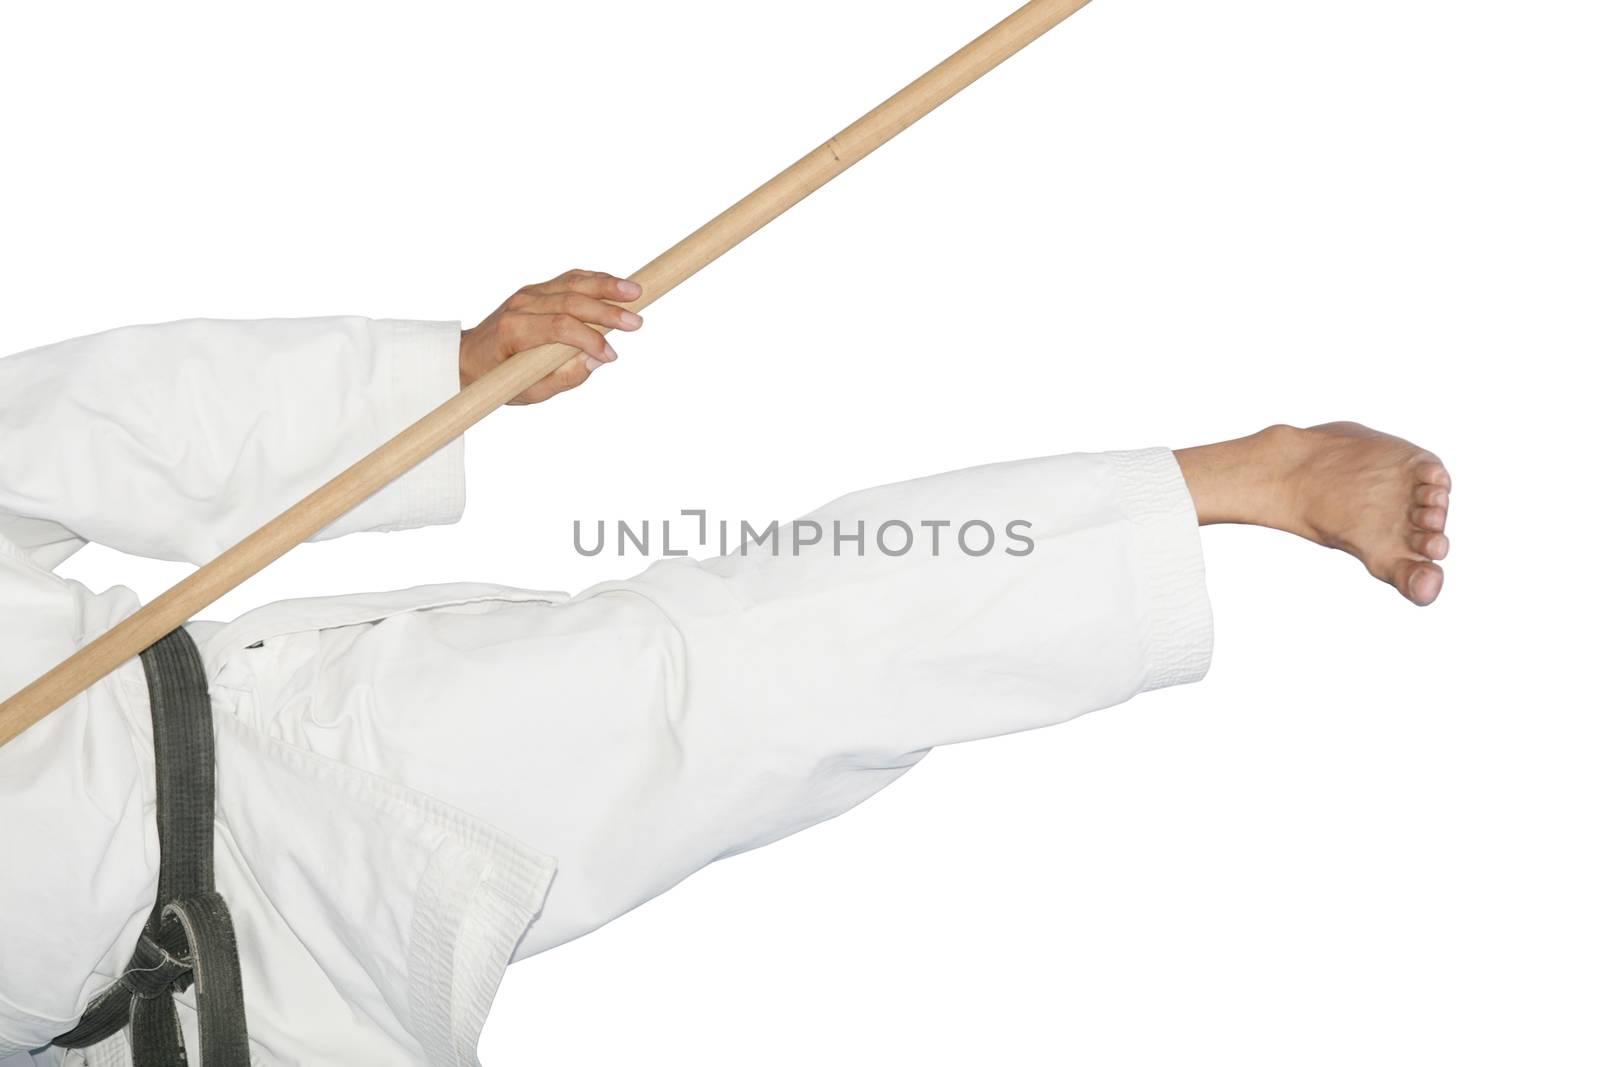 Blackbelt Karate giving a kick with the bo by dacasdo